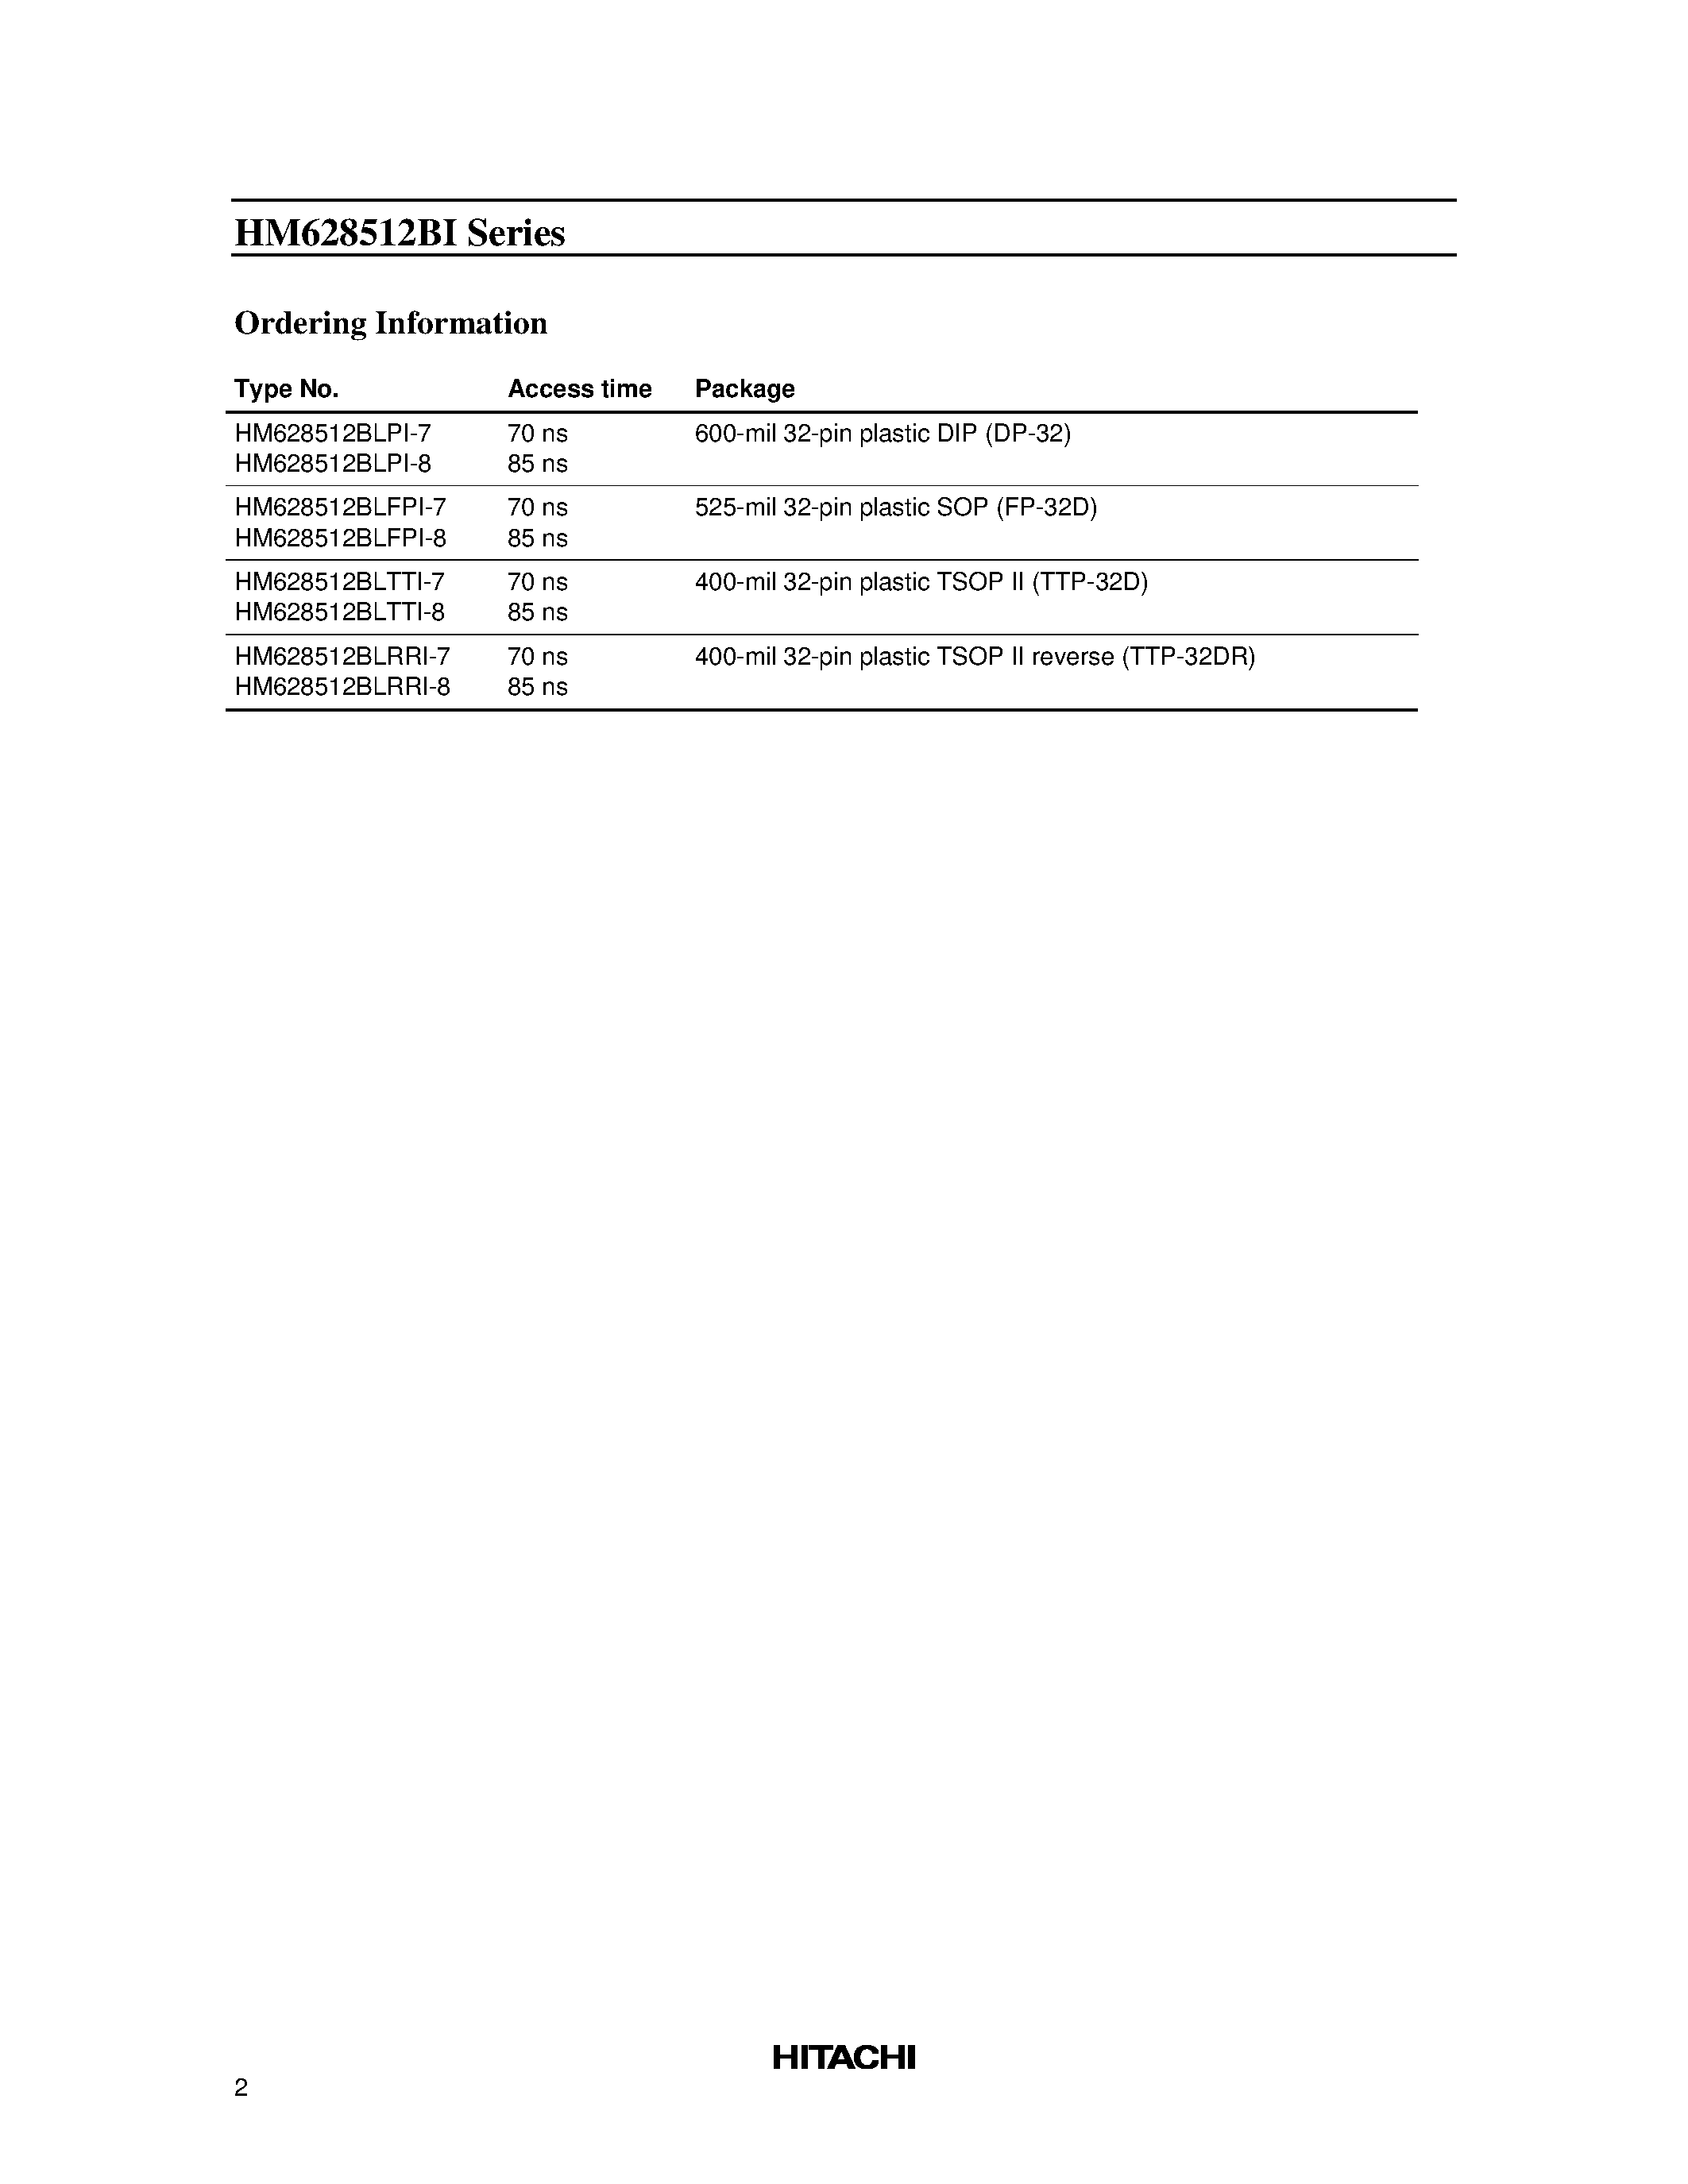 Datasheet HM628512BLRRI-8 - 4 M SRAM (512-kword x 8-bit) page 2